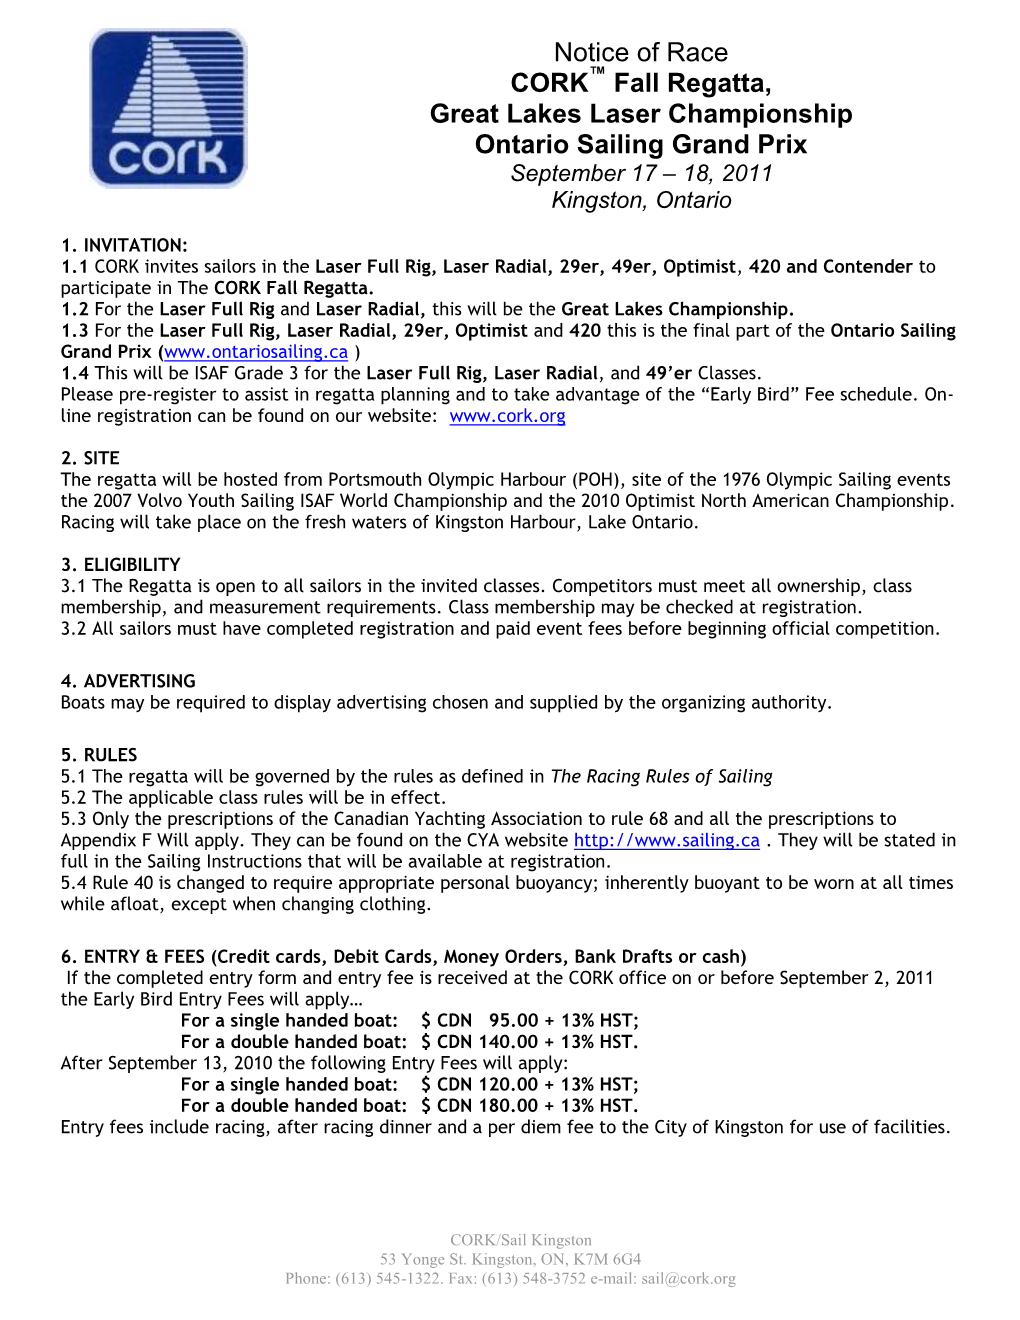 Notice of Race CORK Fall Regatta, Great Lakes Laser Championship